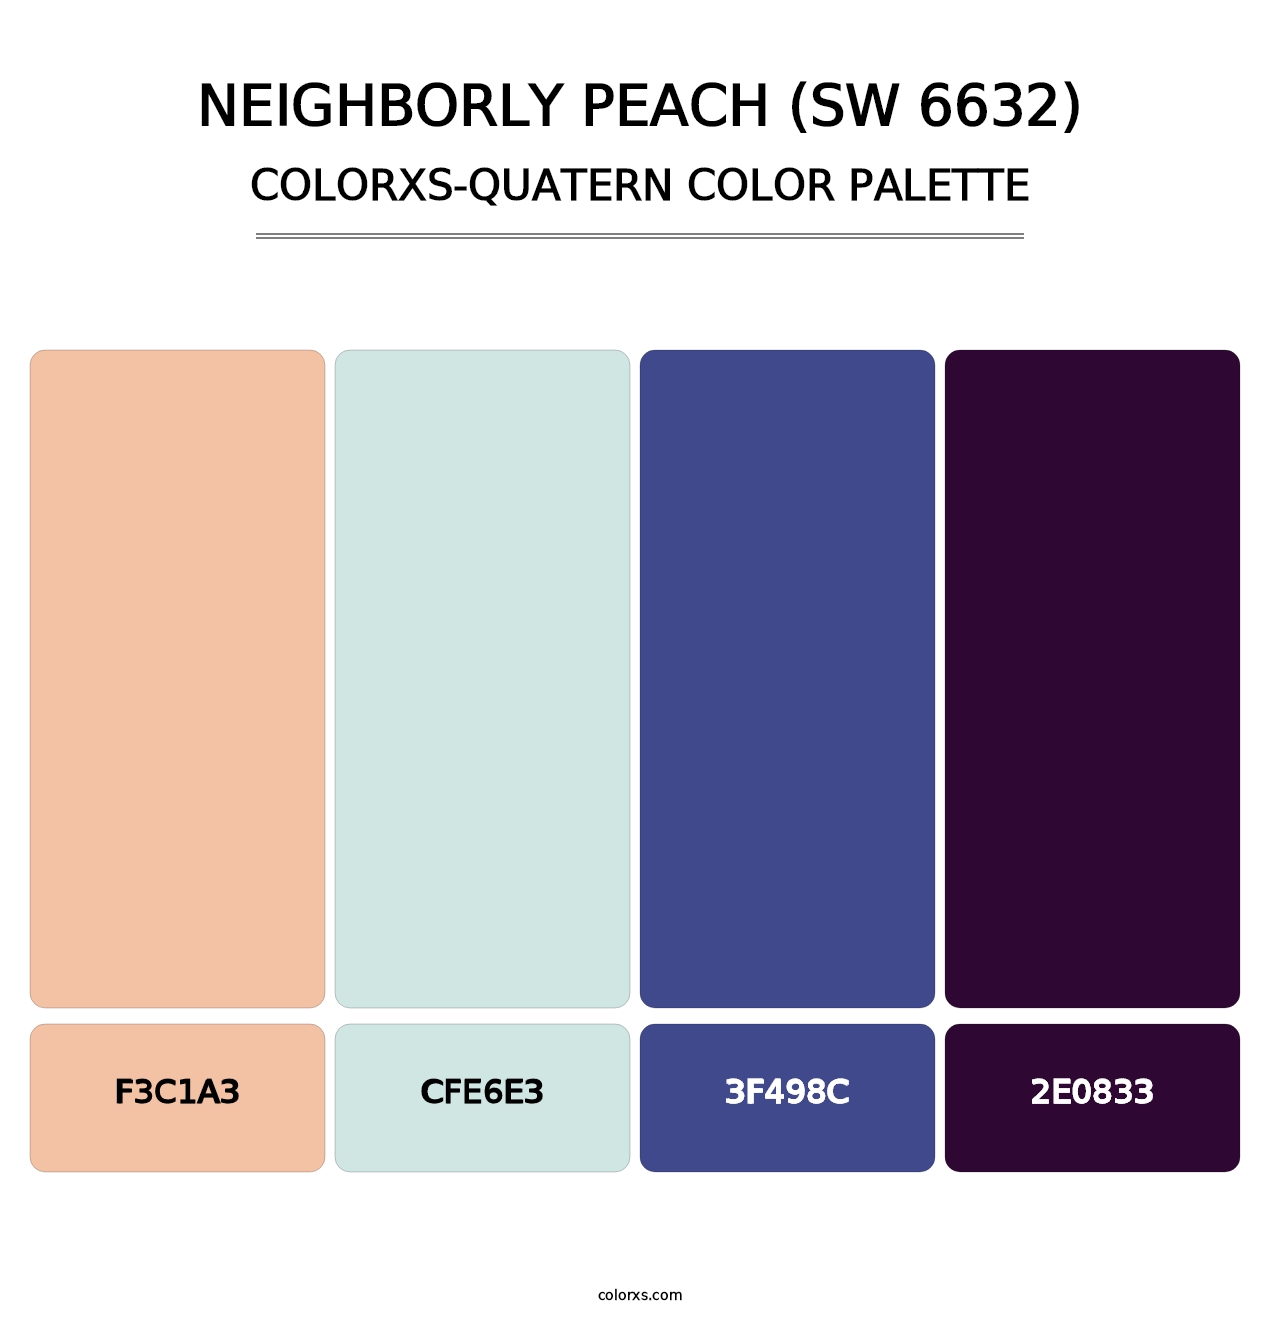 Neighborly Peach (SW 6632) - Colorxs Quatern Palette